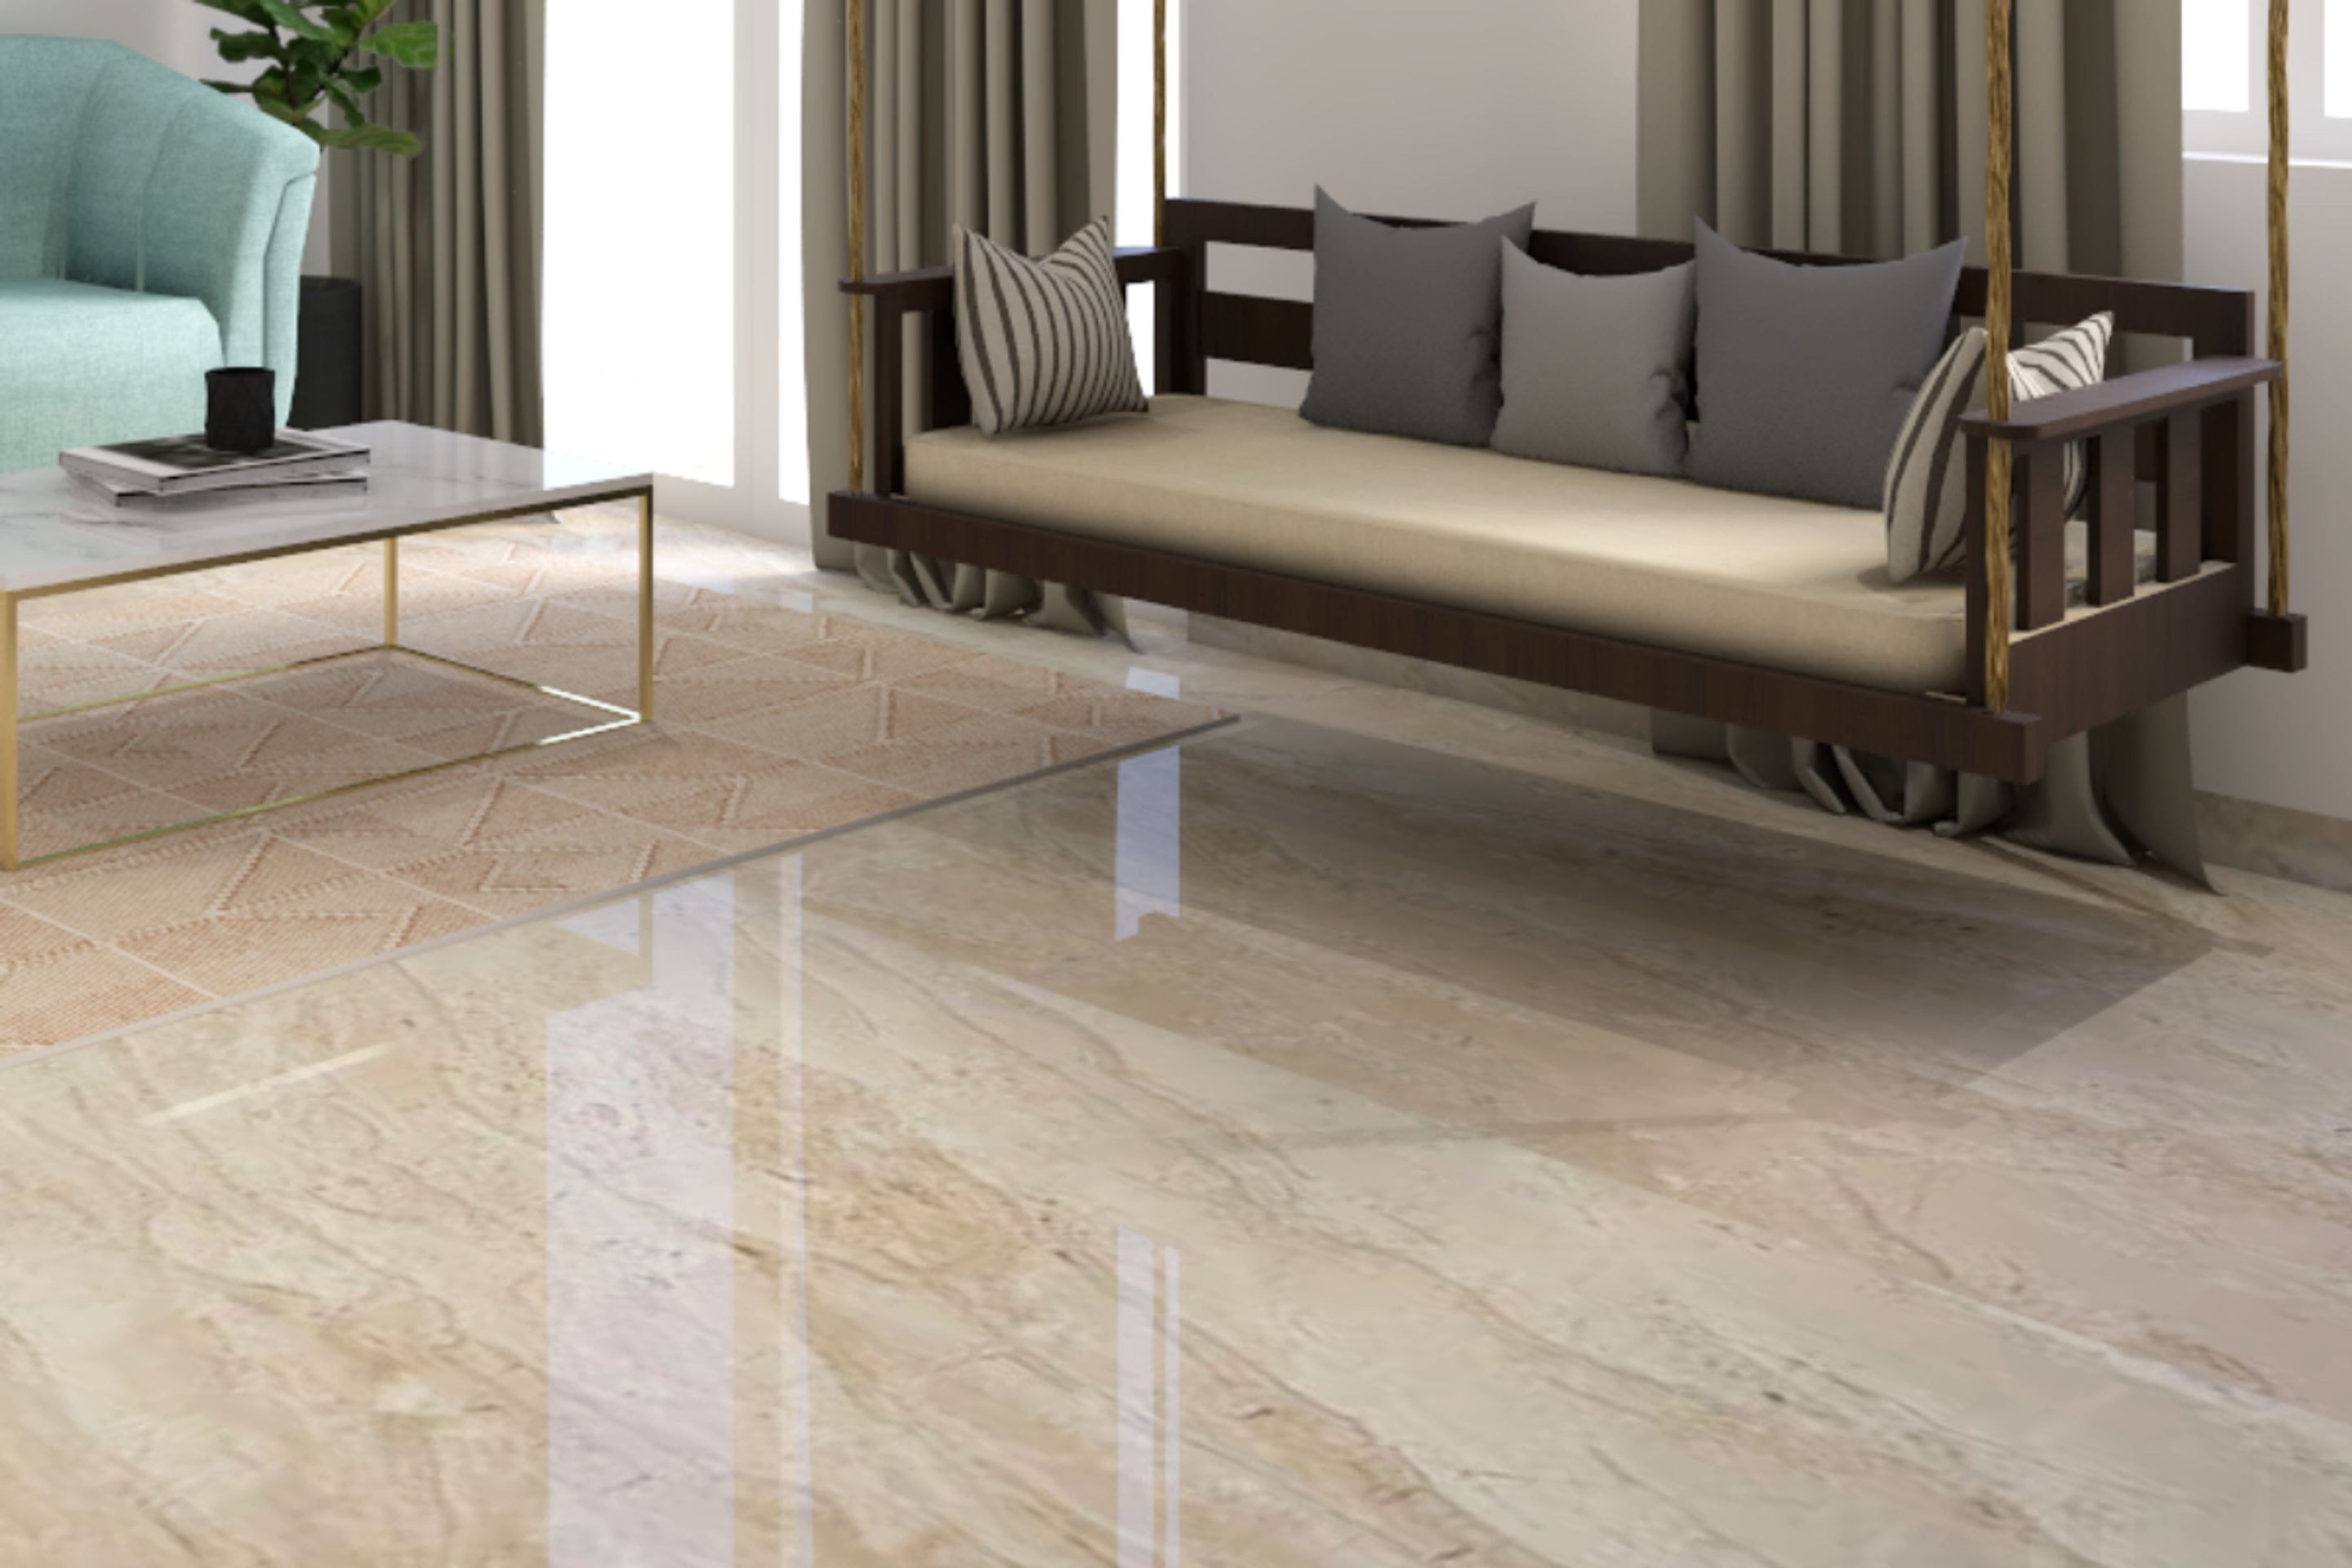 Living Room Floor Tiles Design With Price